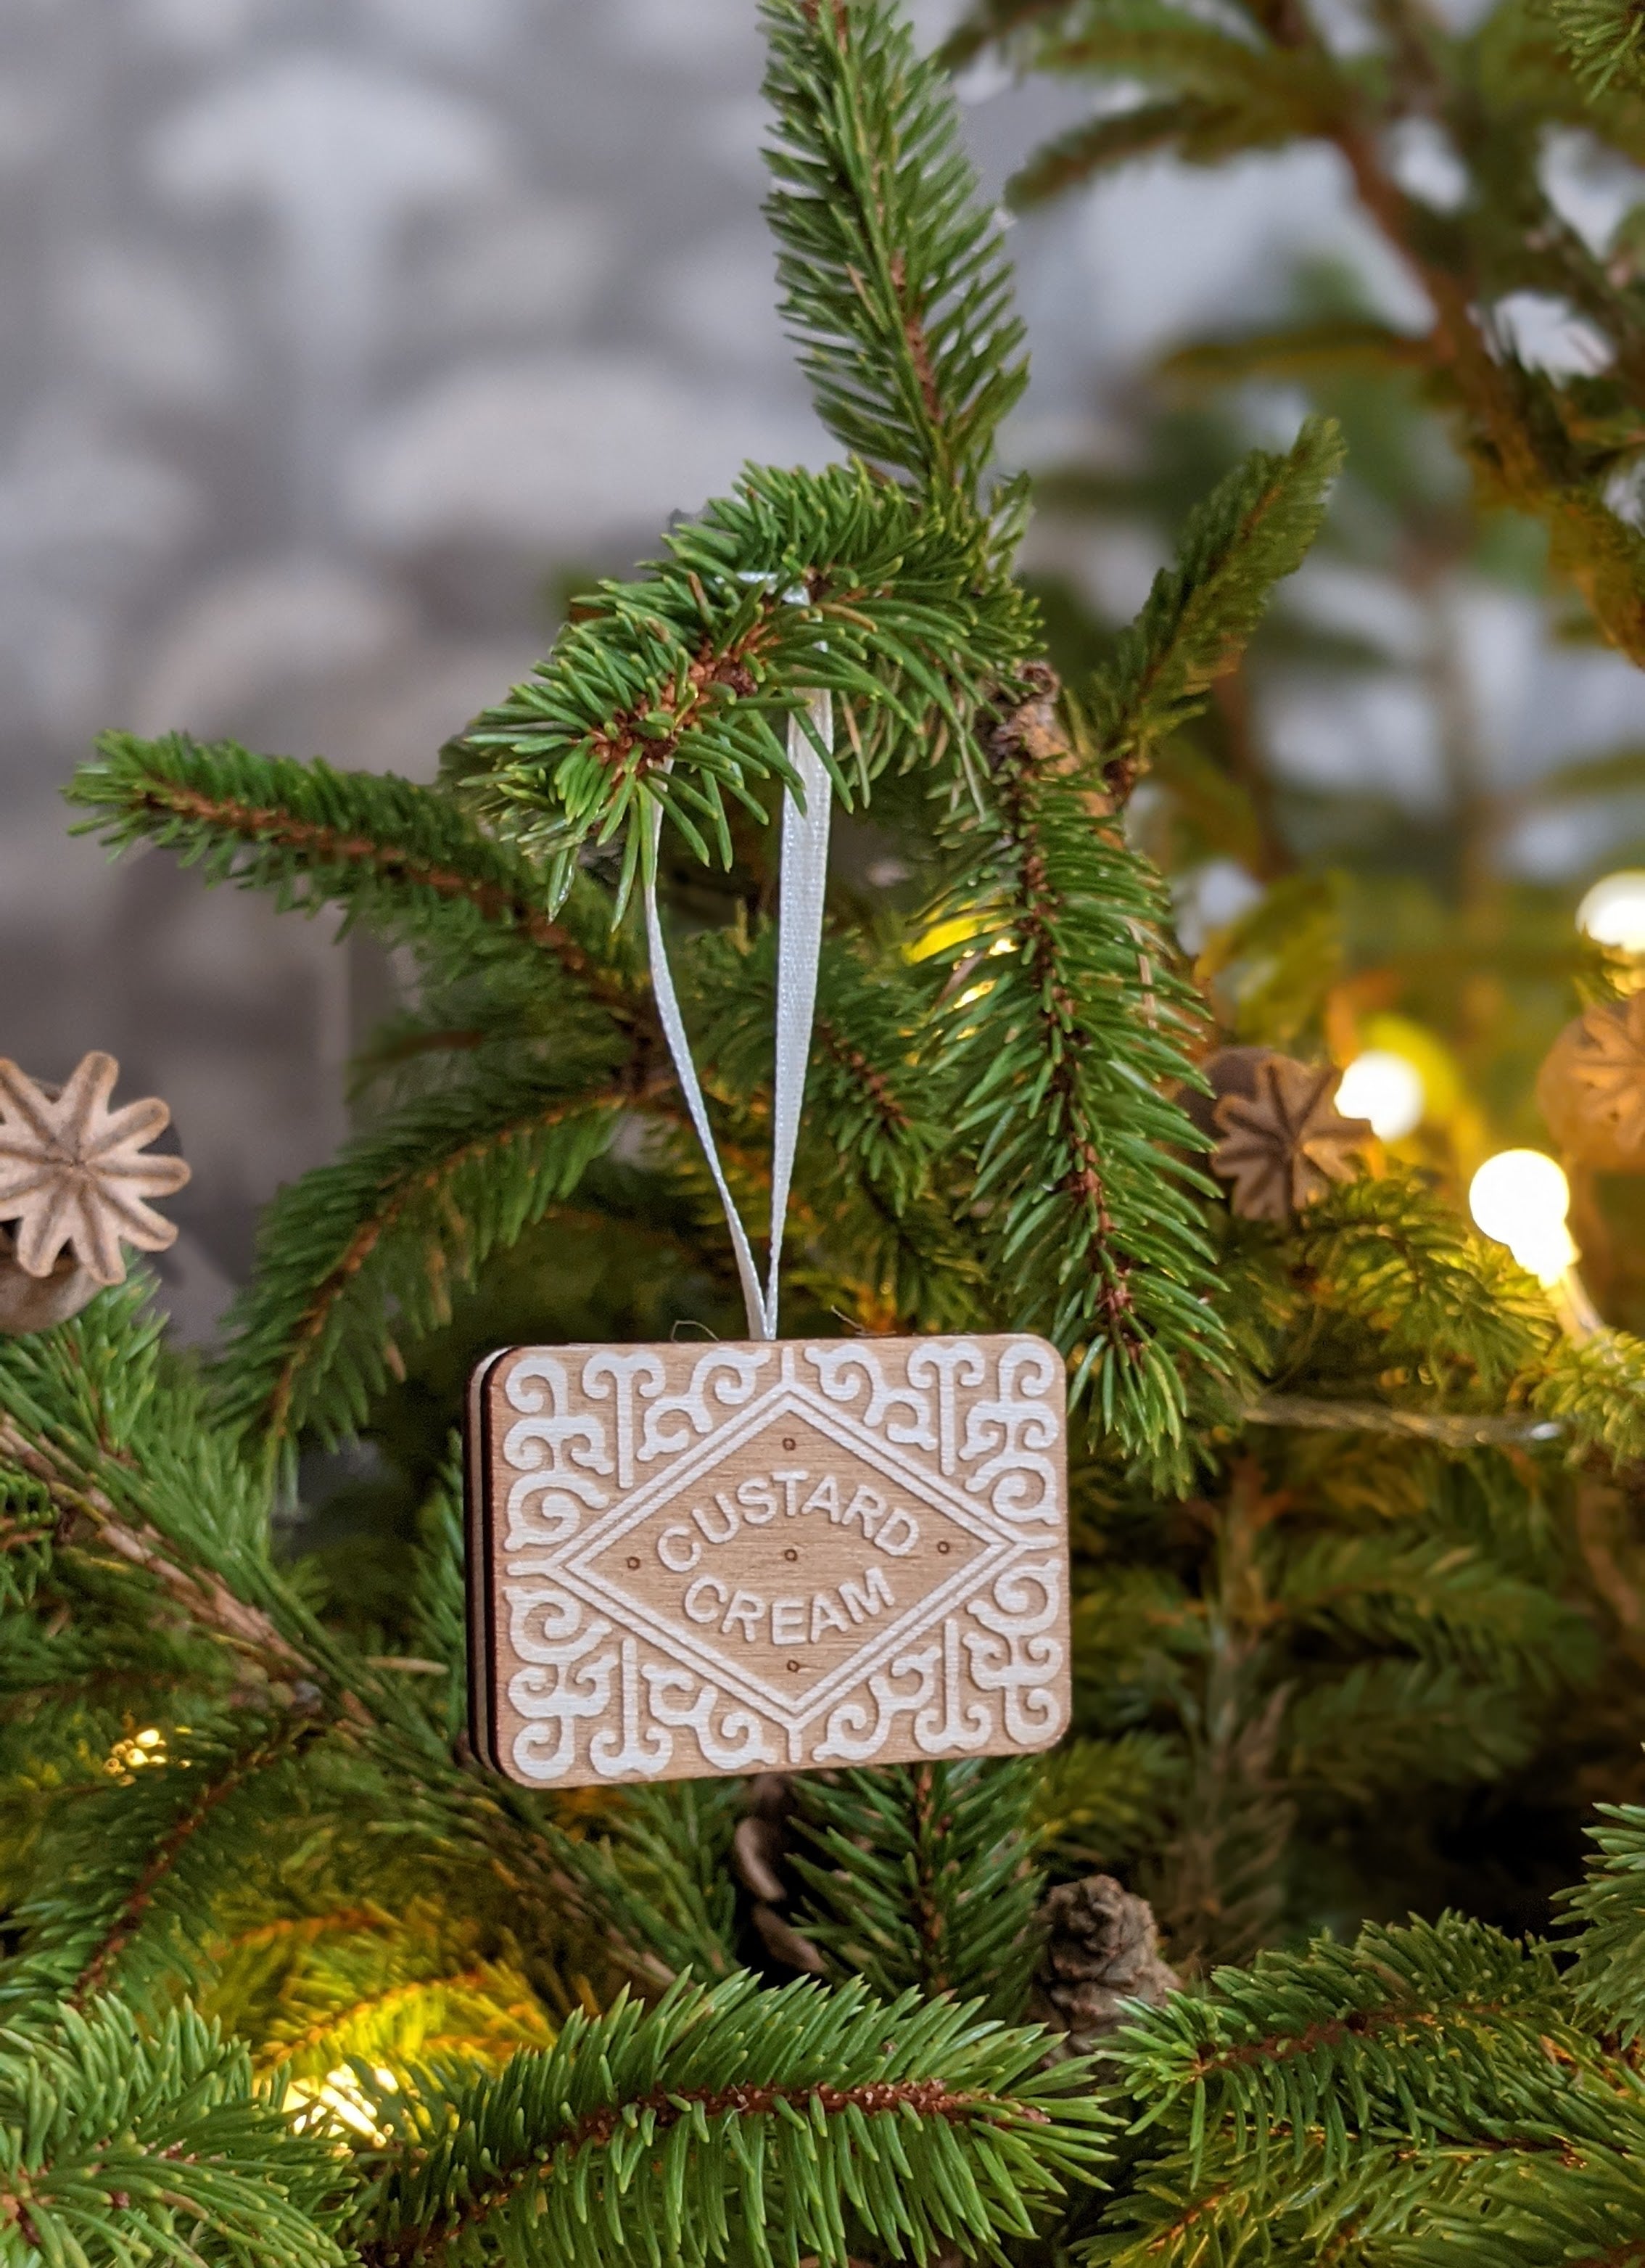 custard cream christmas tree decoration by Dunked